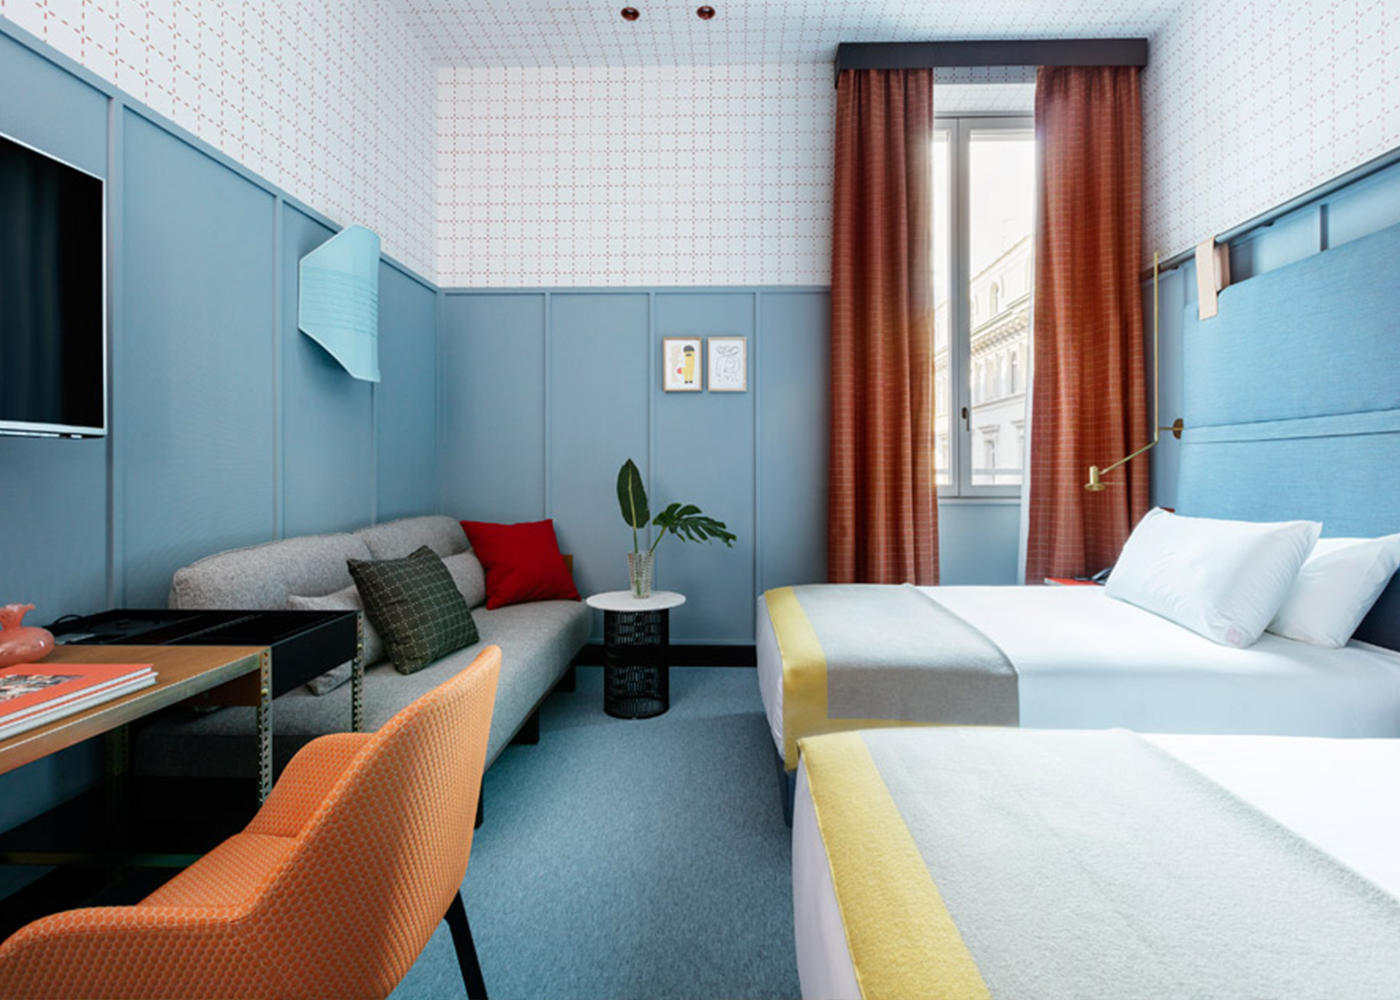 patricia-urquiola-room-mate-hotels-interior-design-milan_dezeen_936_5